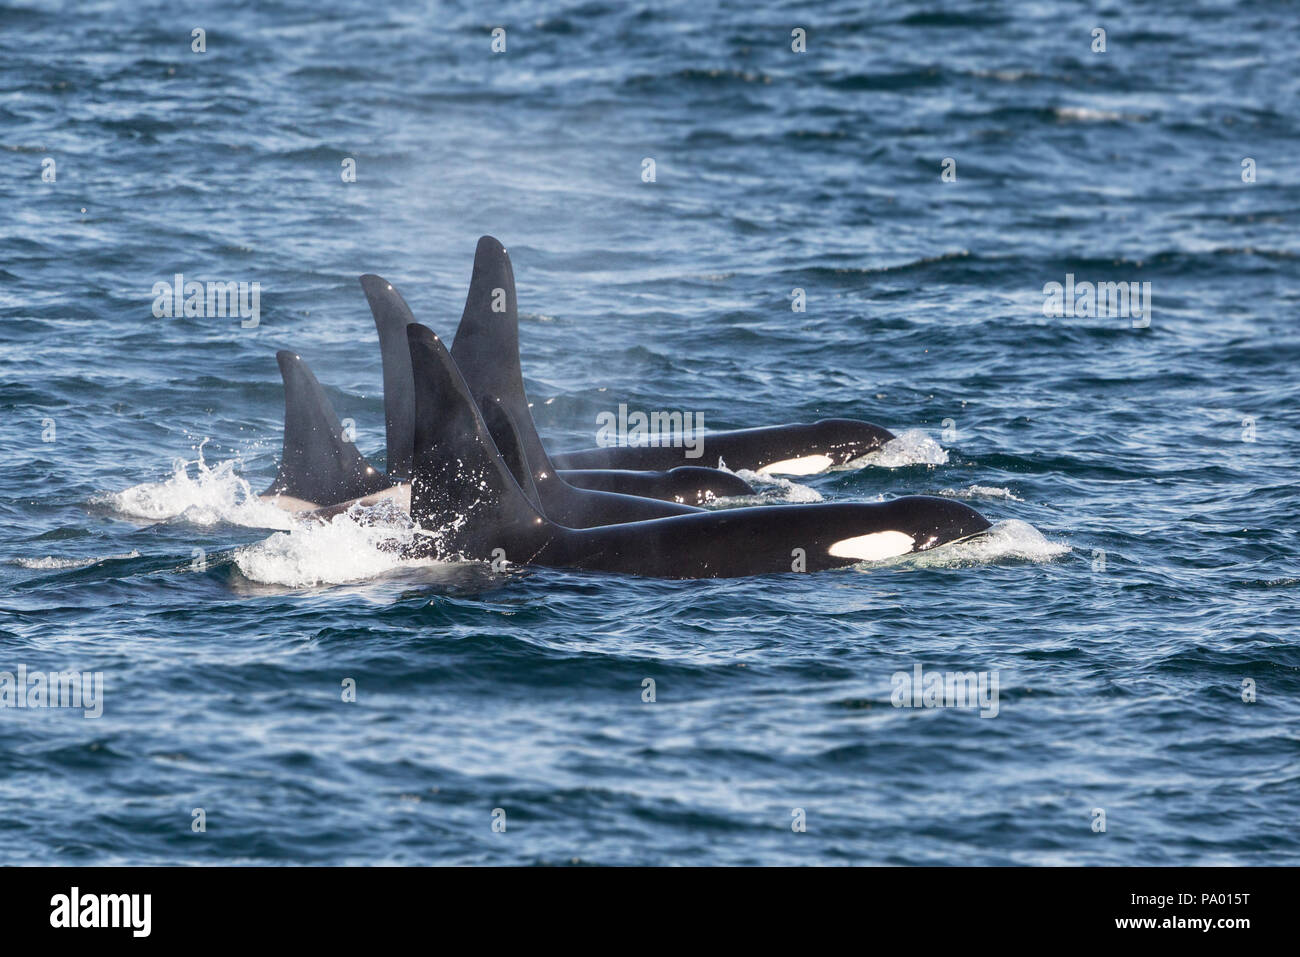 Vaina de la Ballena Asesina u Orca (Orcinus orca), Rusia oriental Foto de stock